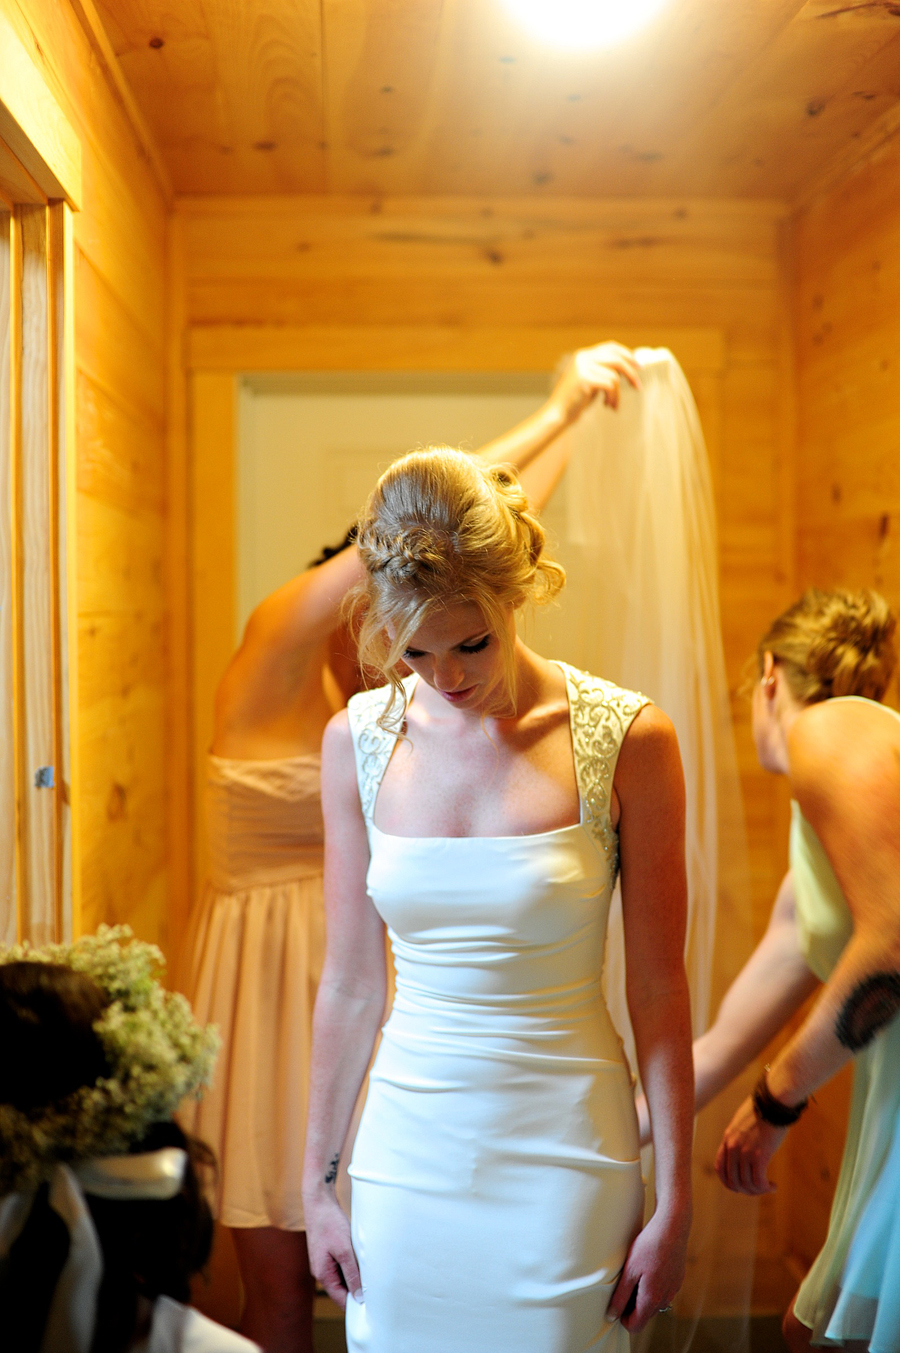 Cory + Ben | Married! 08.23.14 | Camp Kieve Wedding | Nobleboro, Maine ...